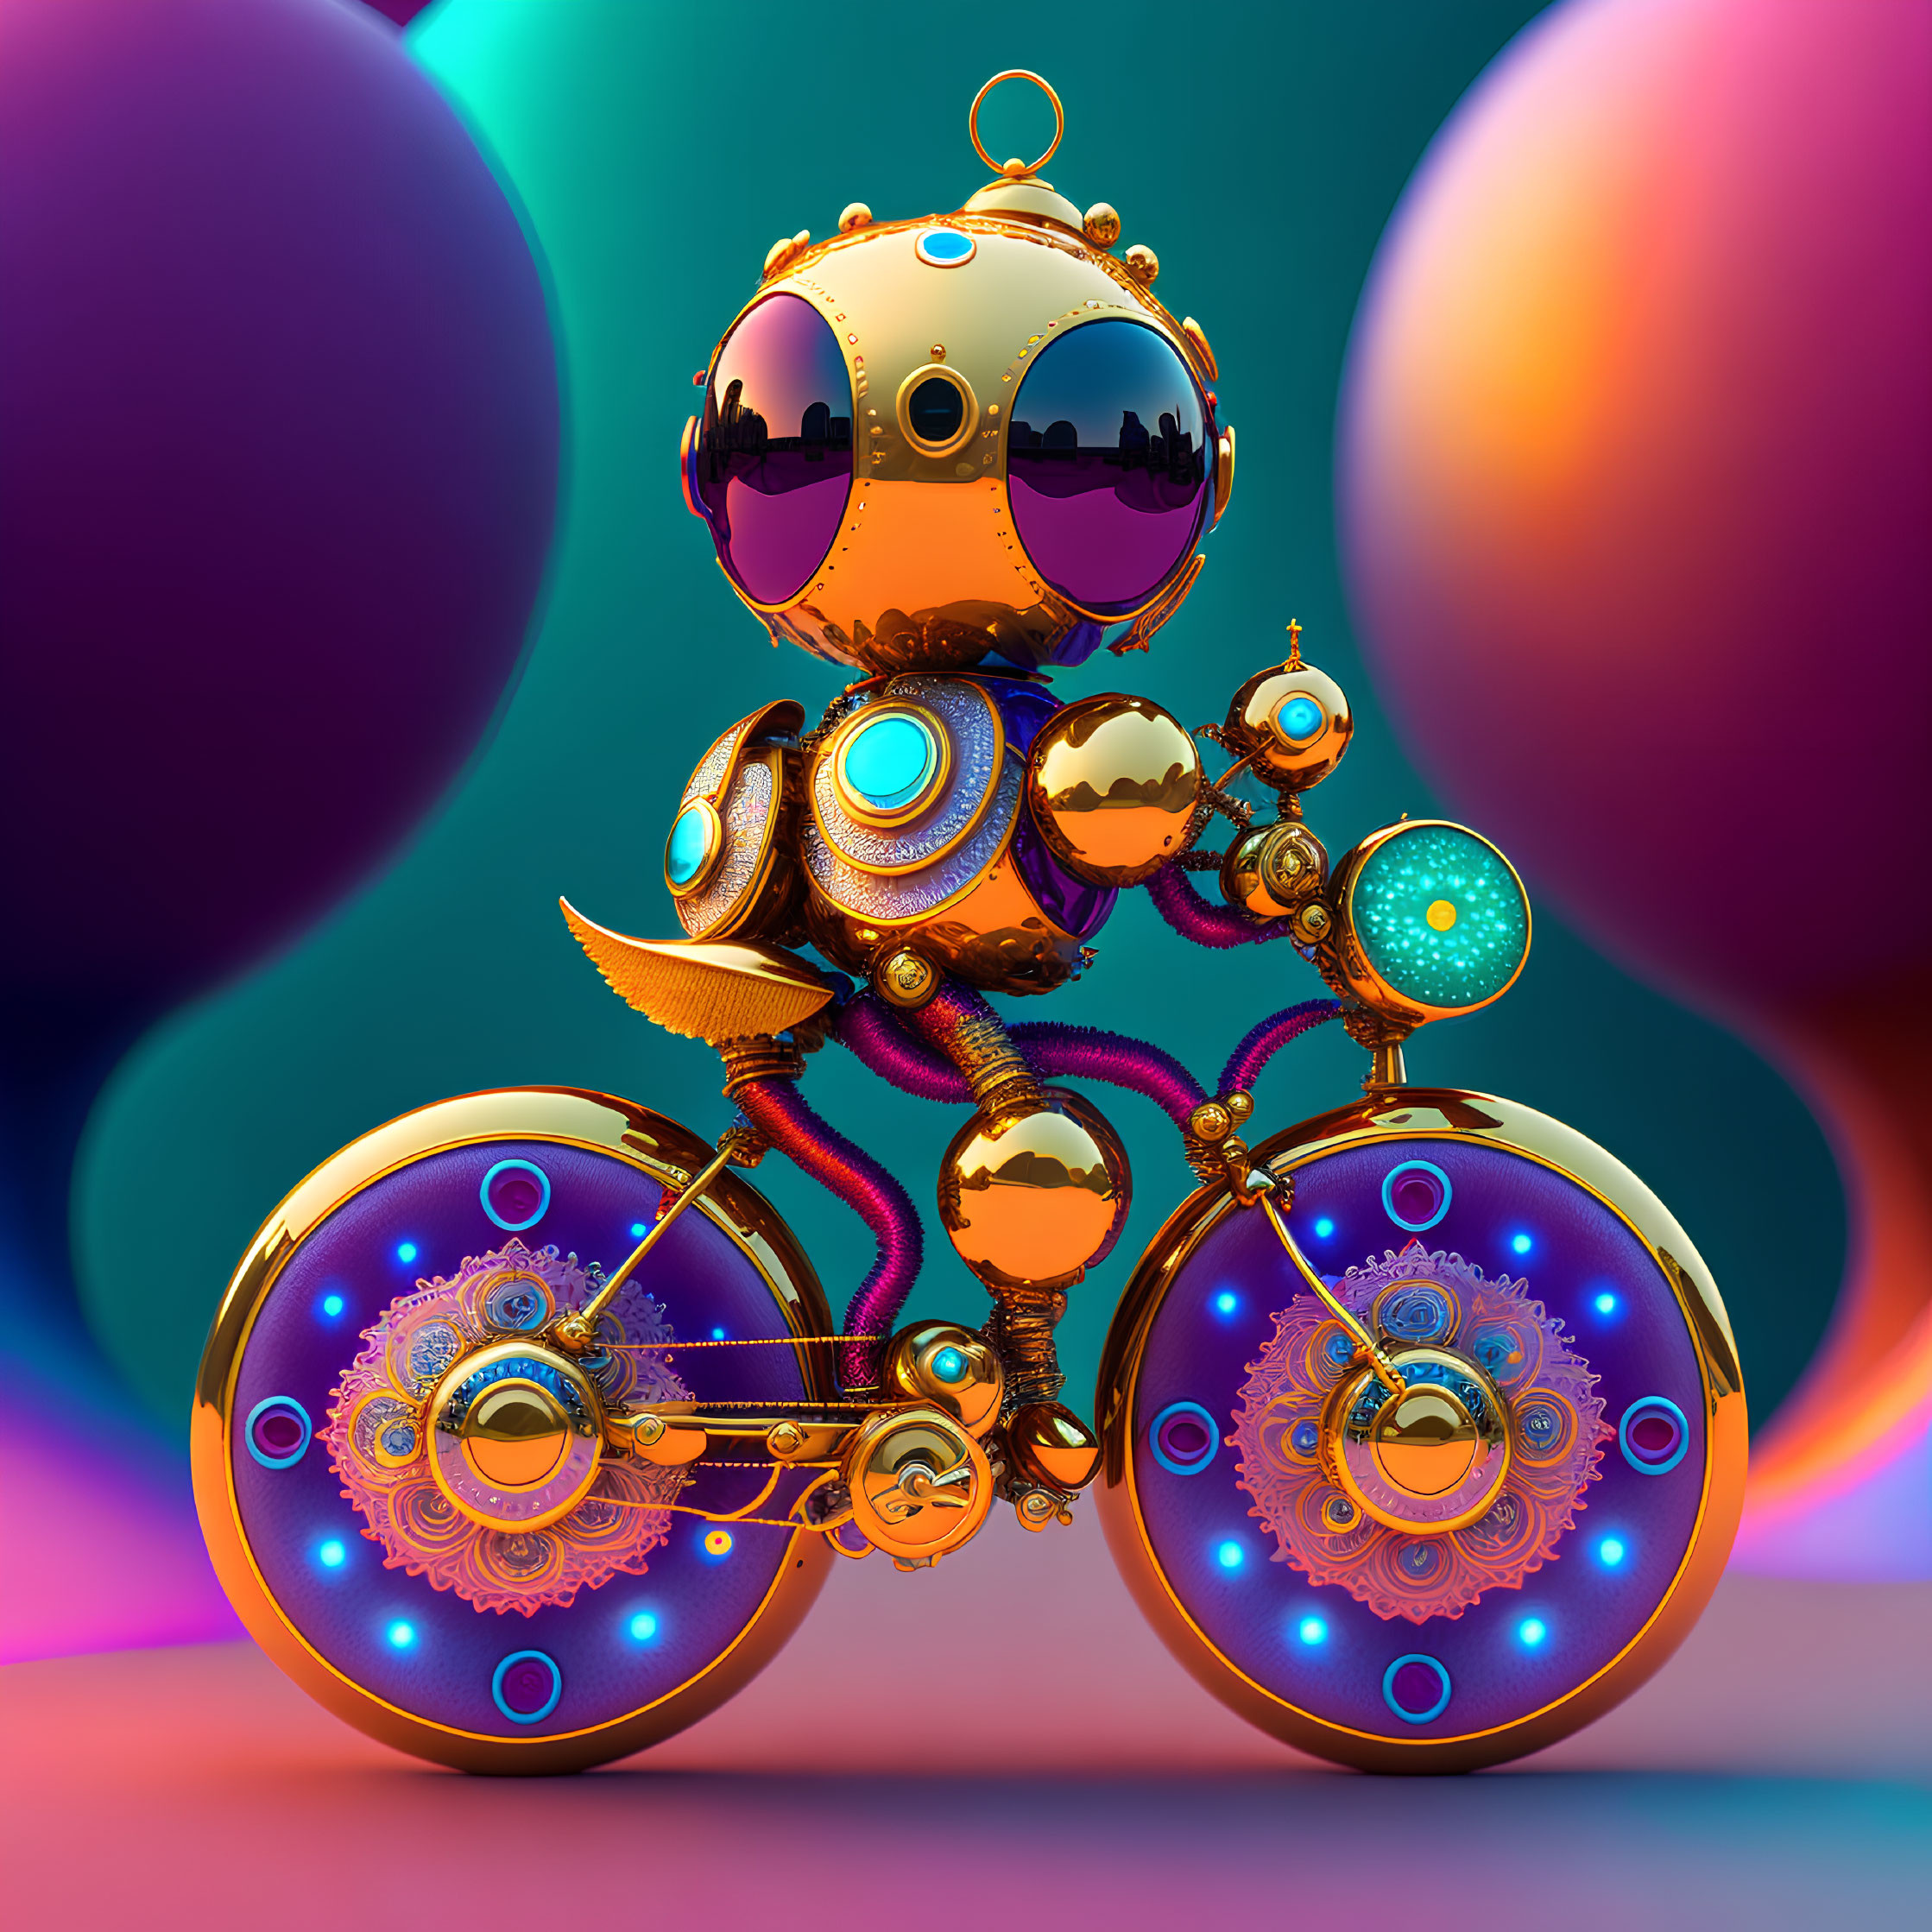 Colorful digital artwork: Whimsical ornate robot on dual-wheeled apparatus